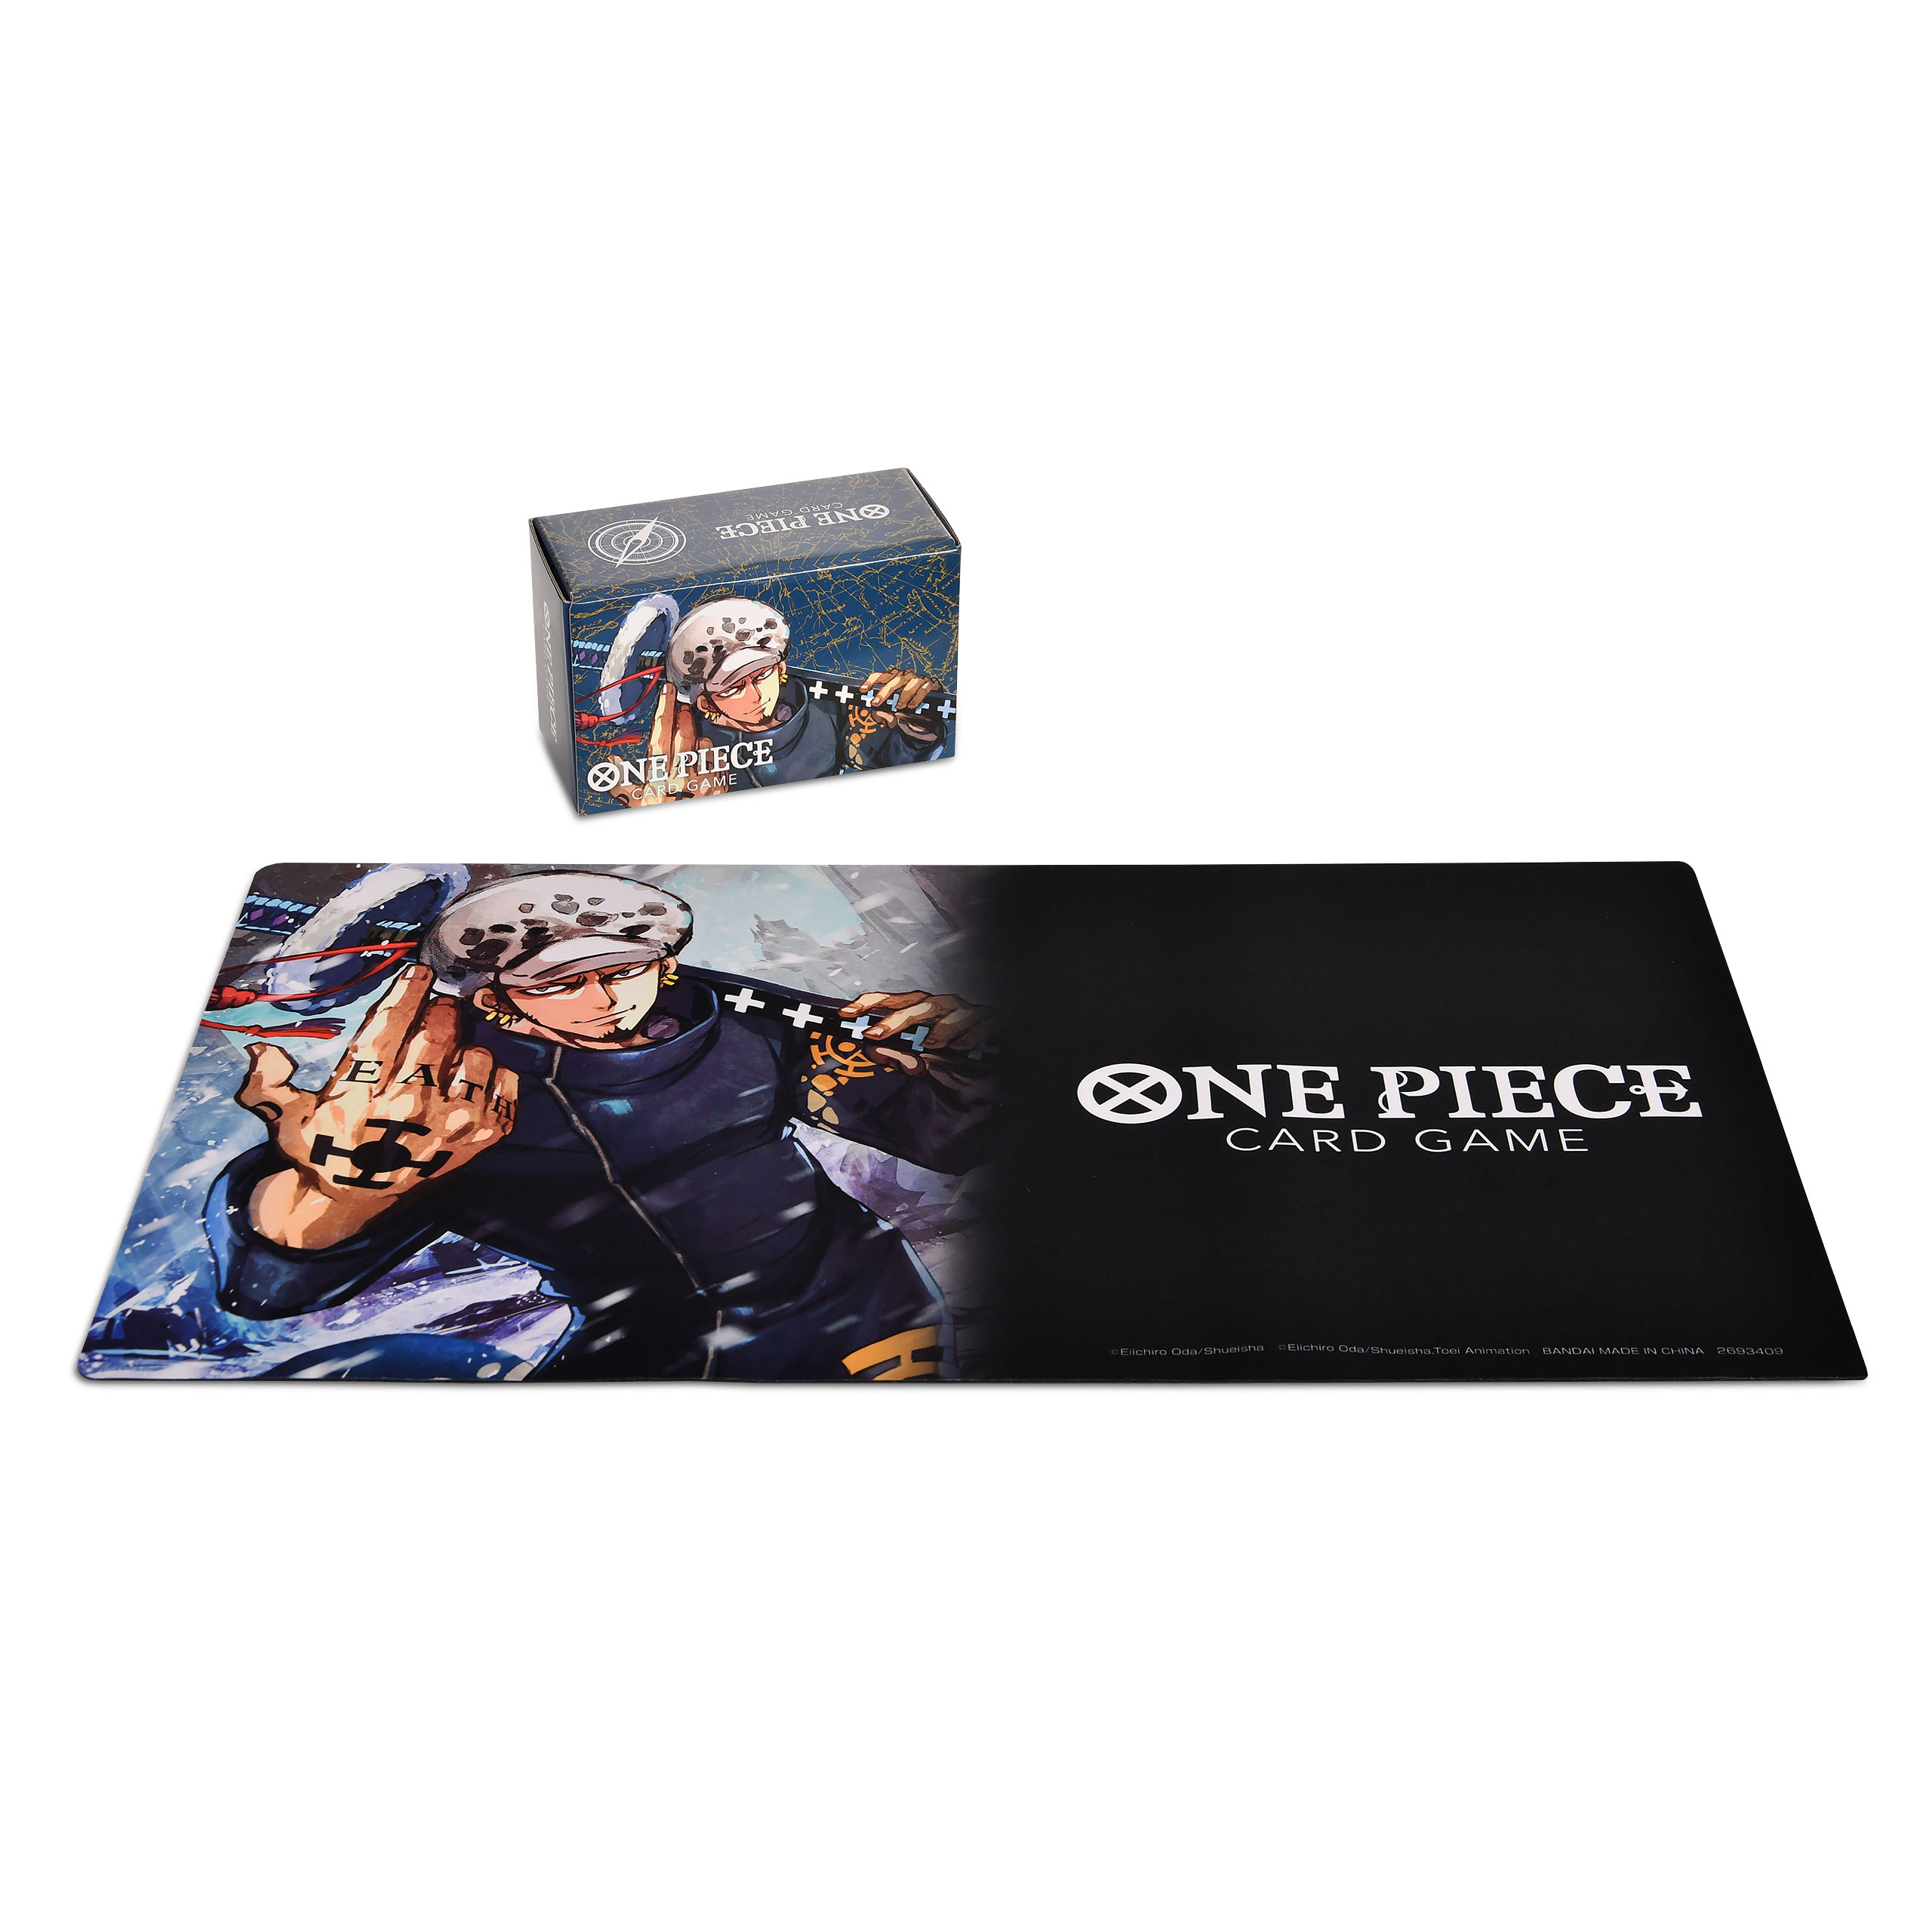 One Piece Card Game - Trafalgar Law Playmat and Storage Box